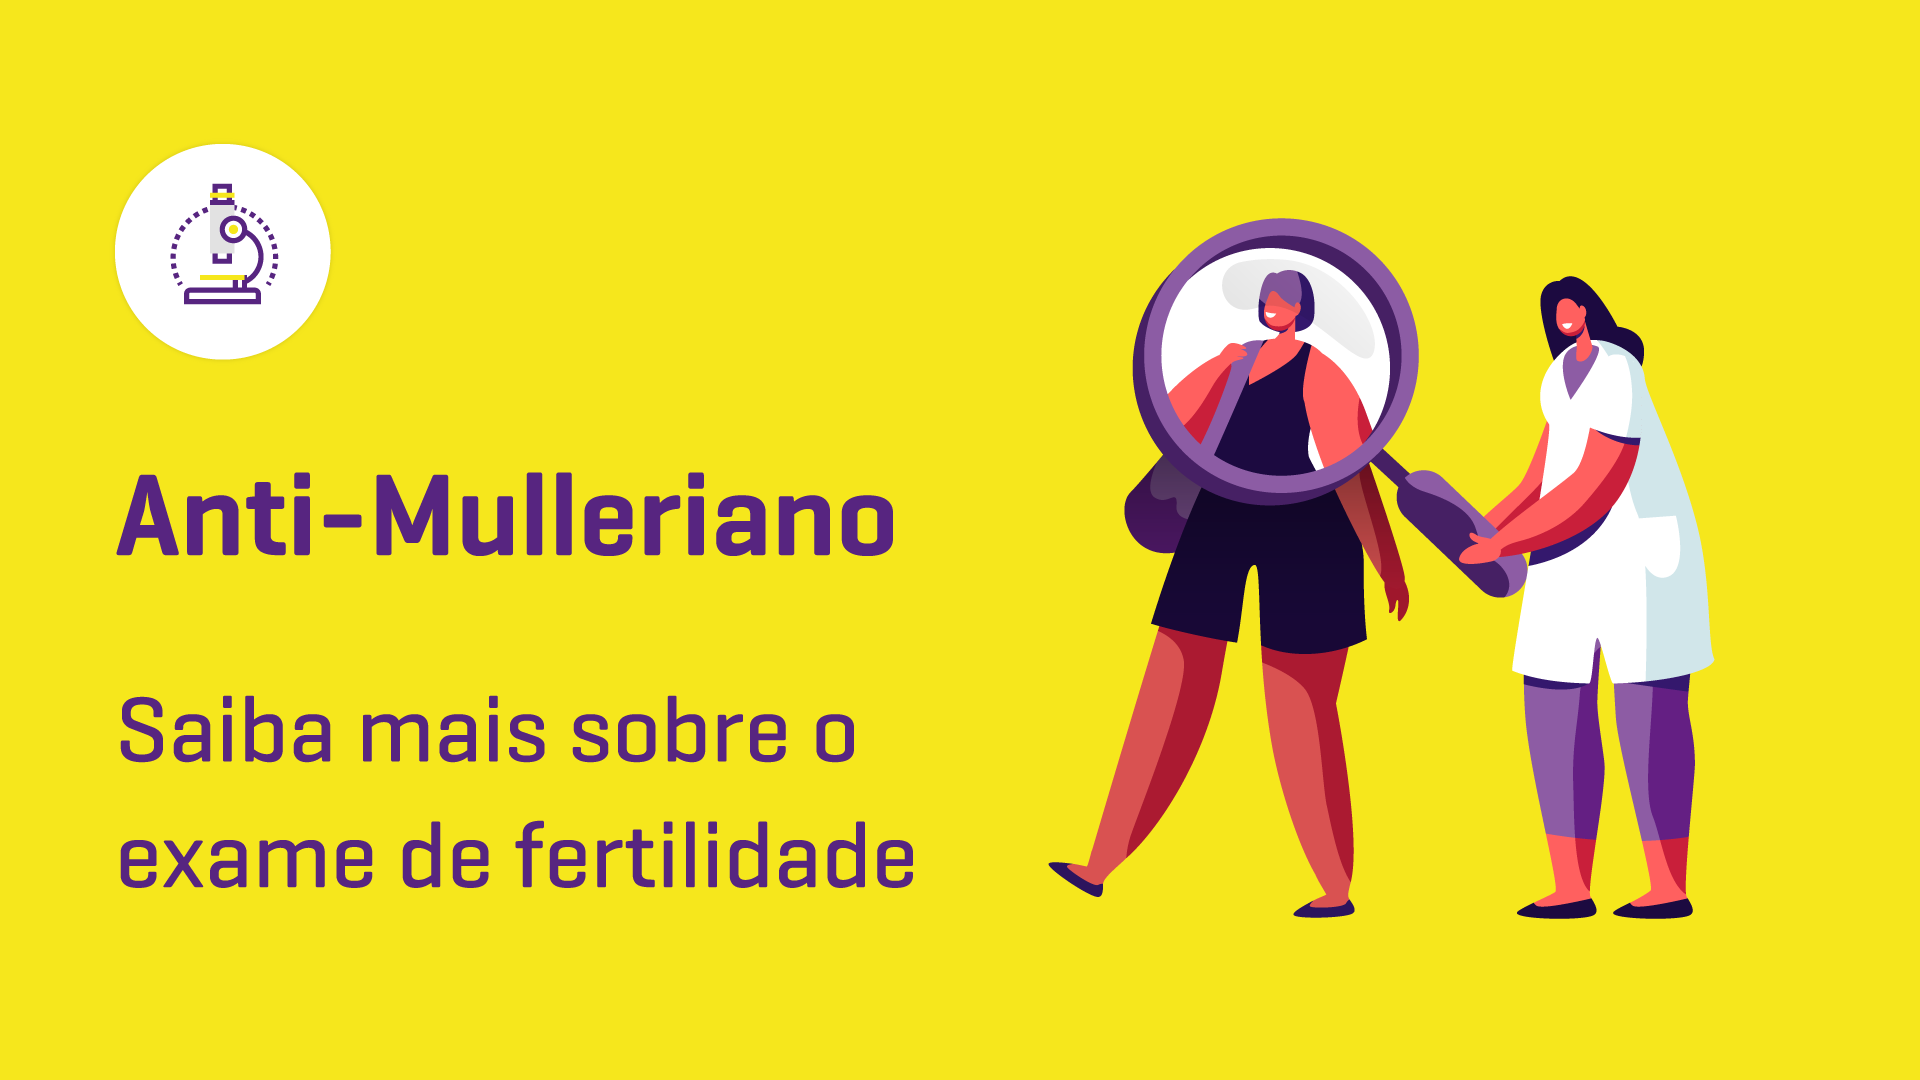 Anti-Mulleriano: saiba mais sobre o exame de fertilidade